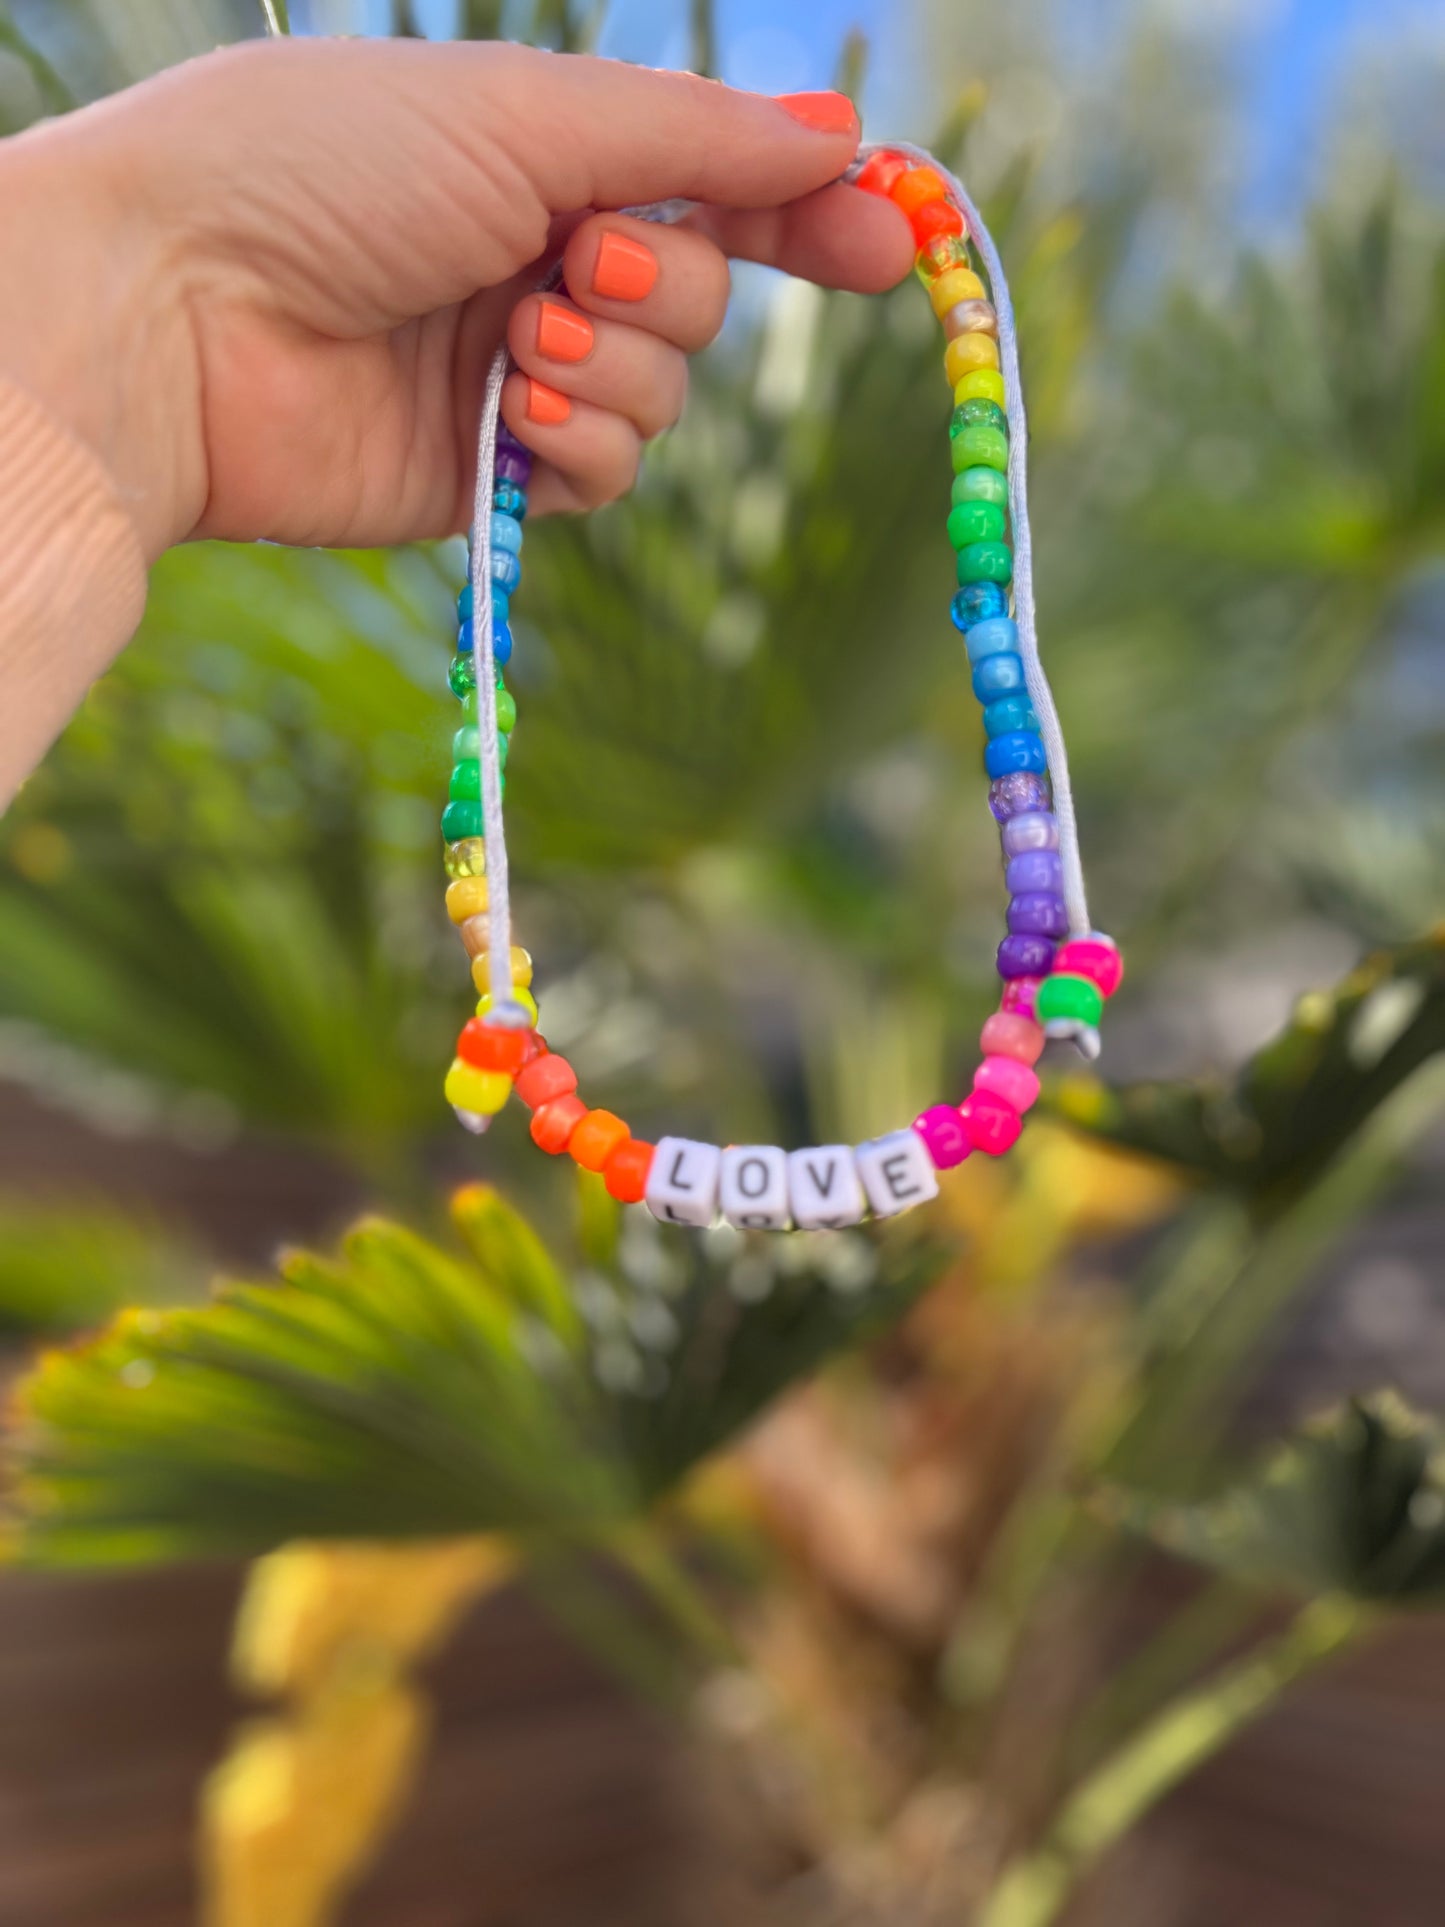 Rainbow LOVE Necklace